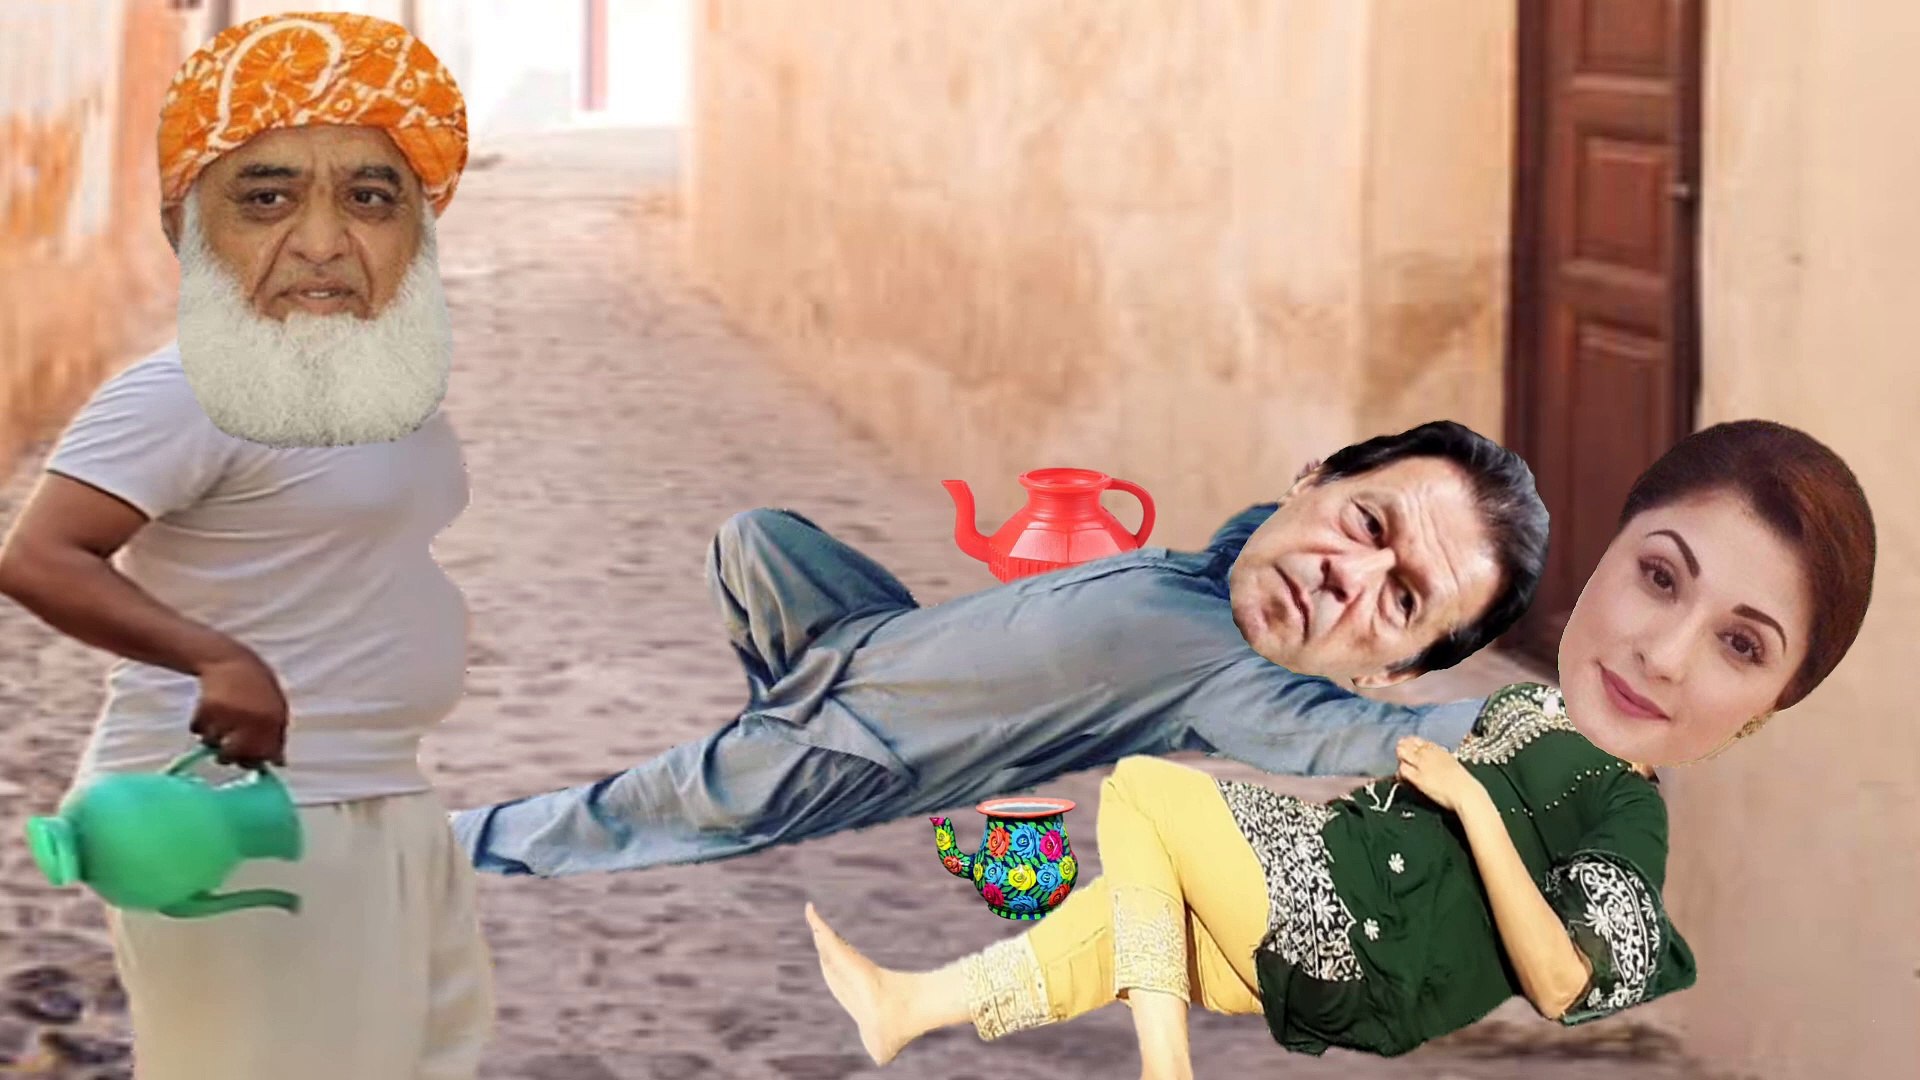 Imran Khan VS Shebaz Sharif & Maryam Nawaz Sharif Bathroom New Funny Video  #imrankhanfunnyvideo #shahbazshariffunnyvideo #maryamnawazfunnyvideo -  video Dailymotion